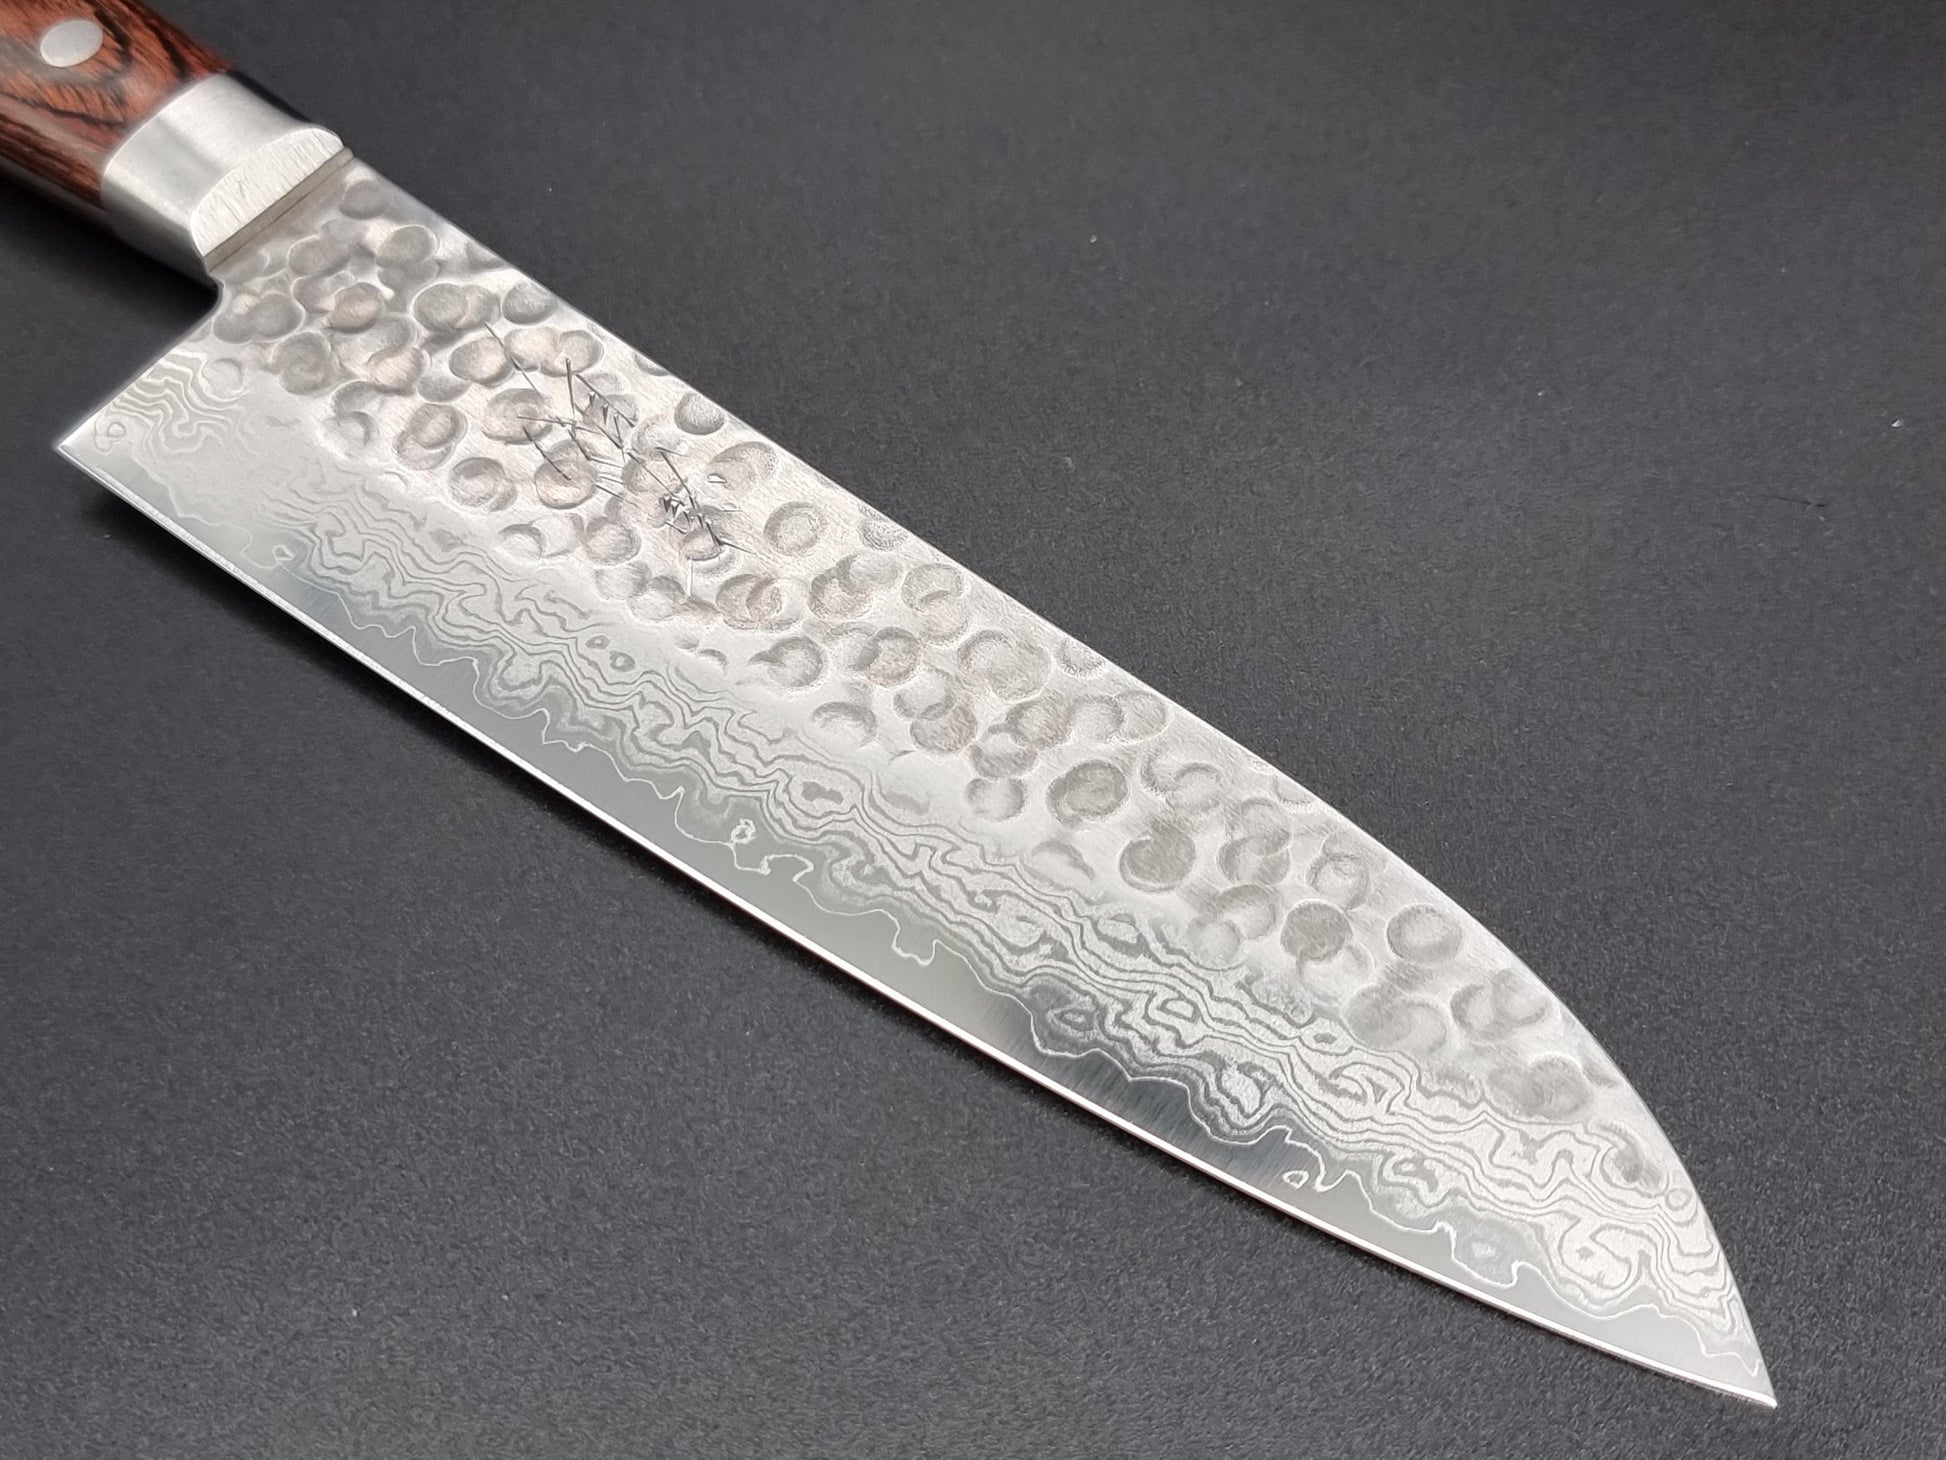 Jikko VG10 Hammered Damascus 180mm Santoku - The Sharp Chef